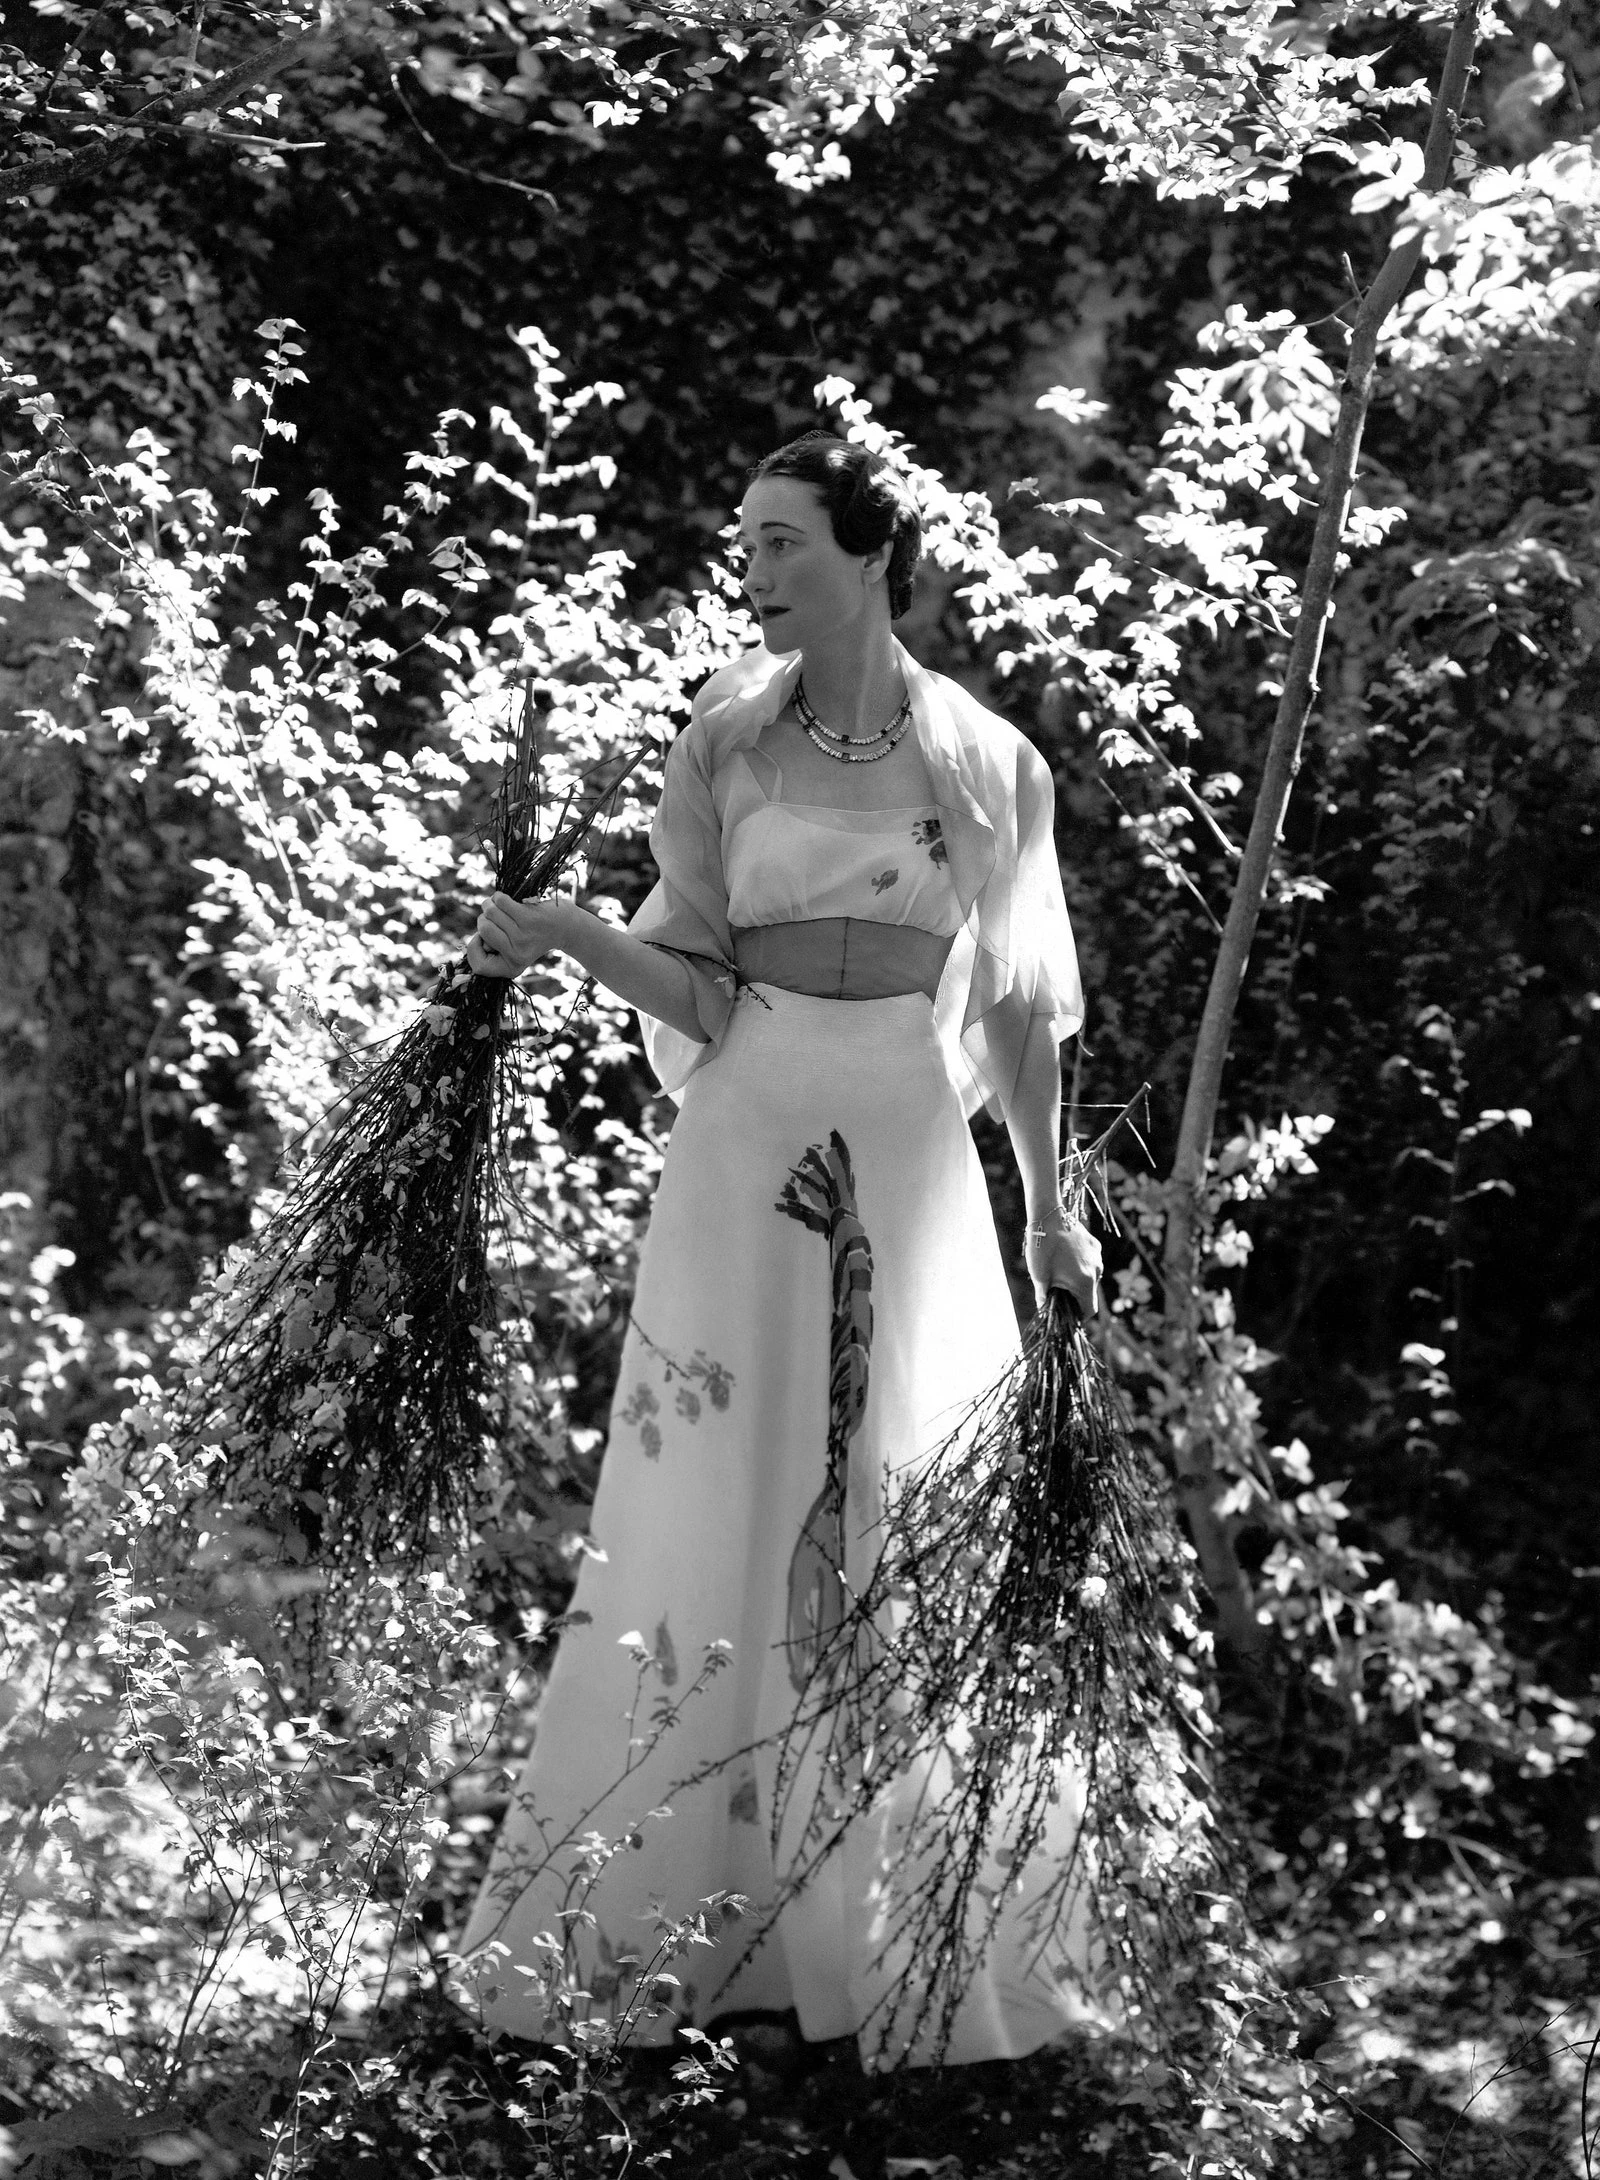 Волліс Сімпсон у сукні з омарами Schiaparelli в саду Château de Candé для Vogue, 1937 рік.2